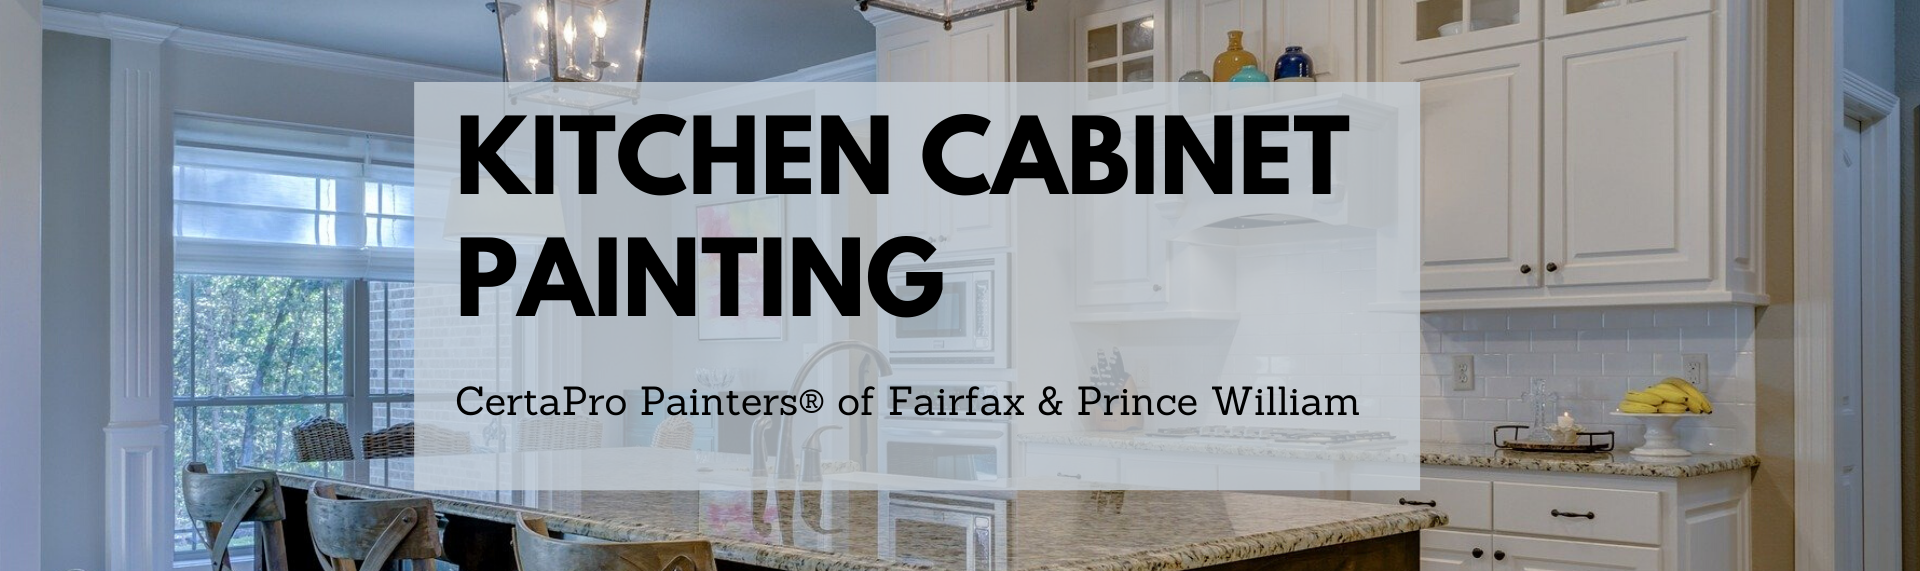 Kitchen Cabinet Painting In Fairfax